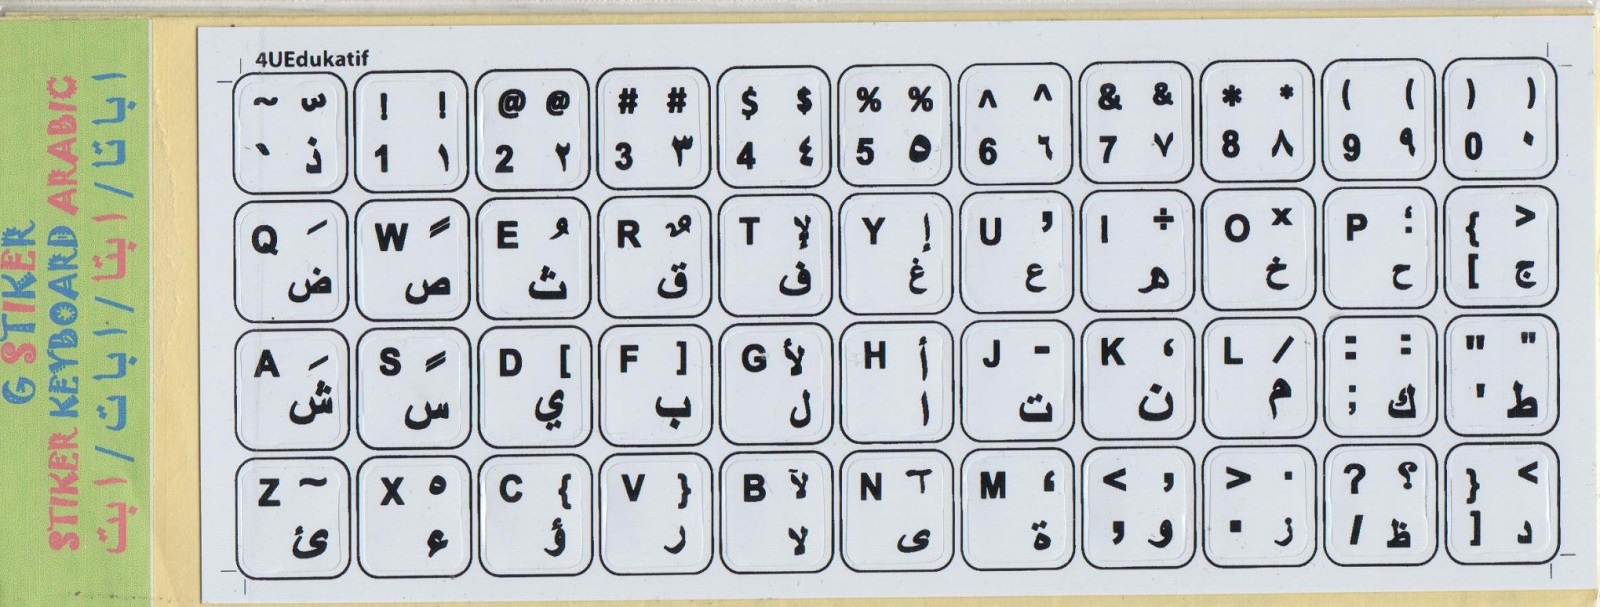 Gambar Keyboard Laptop Bahasa Arab